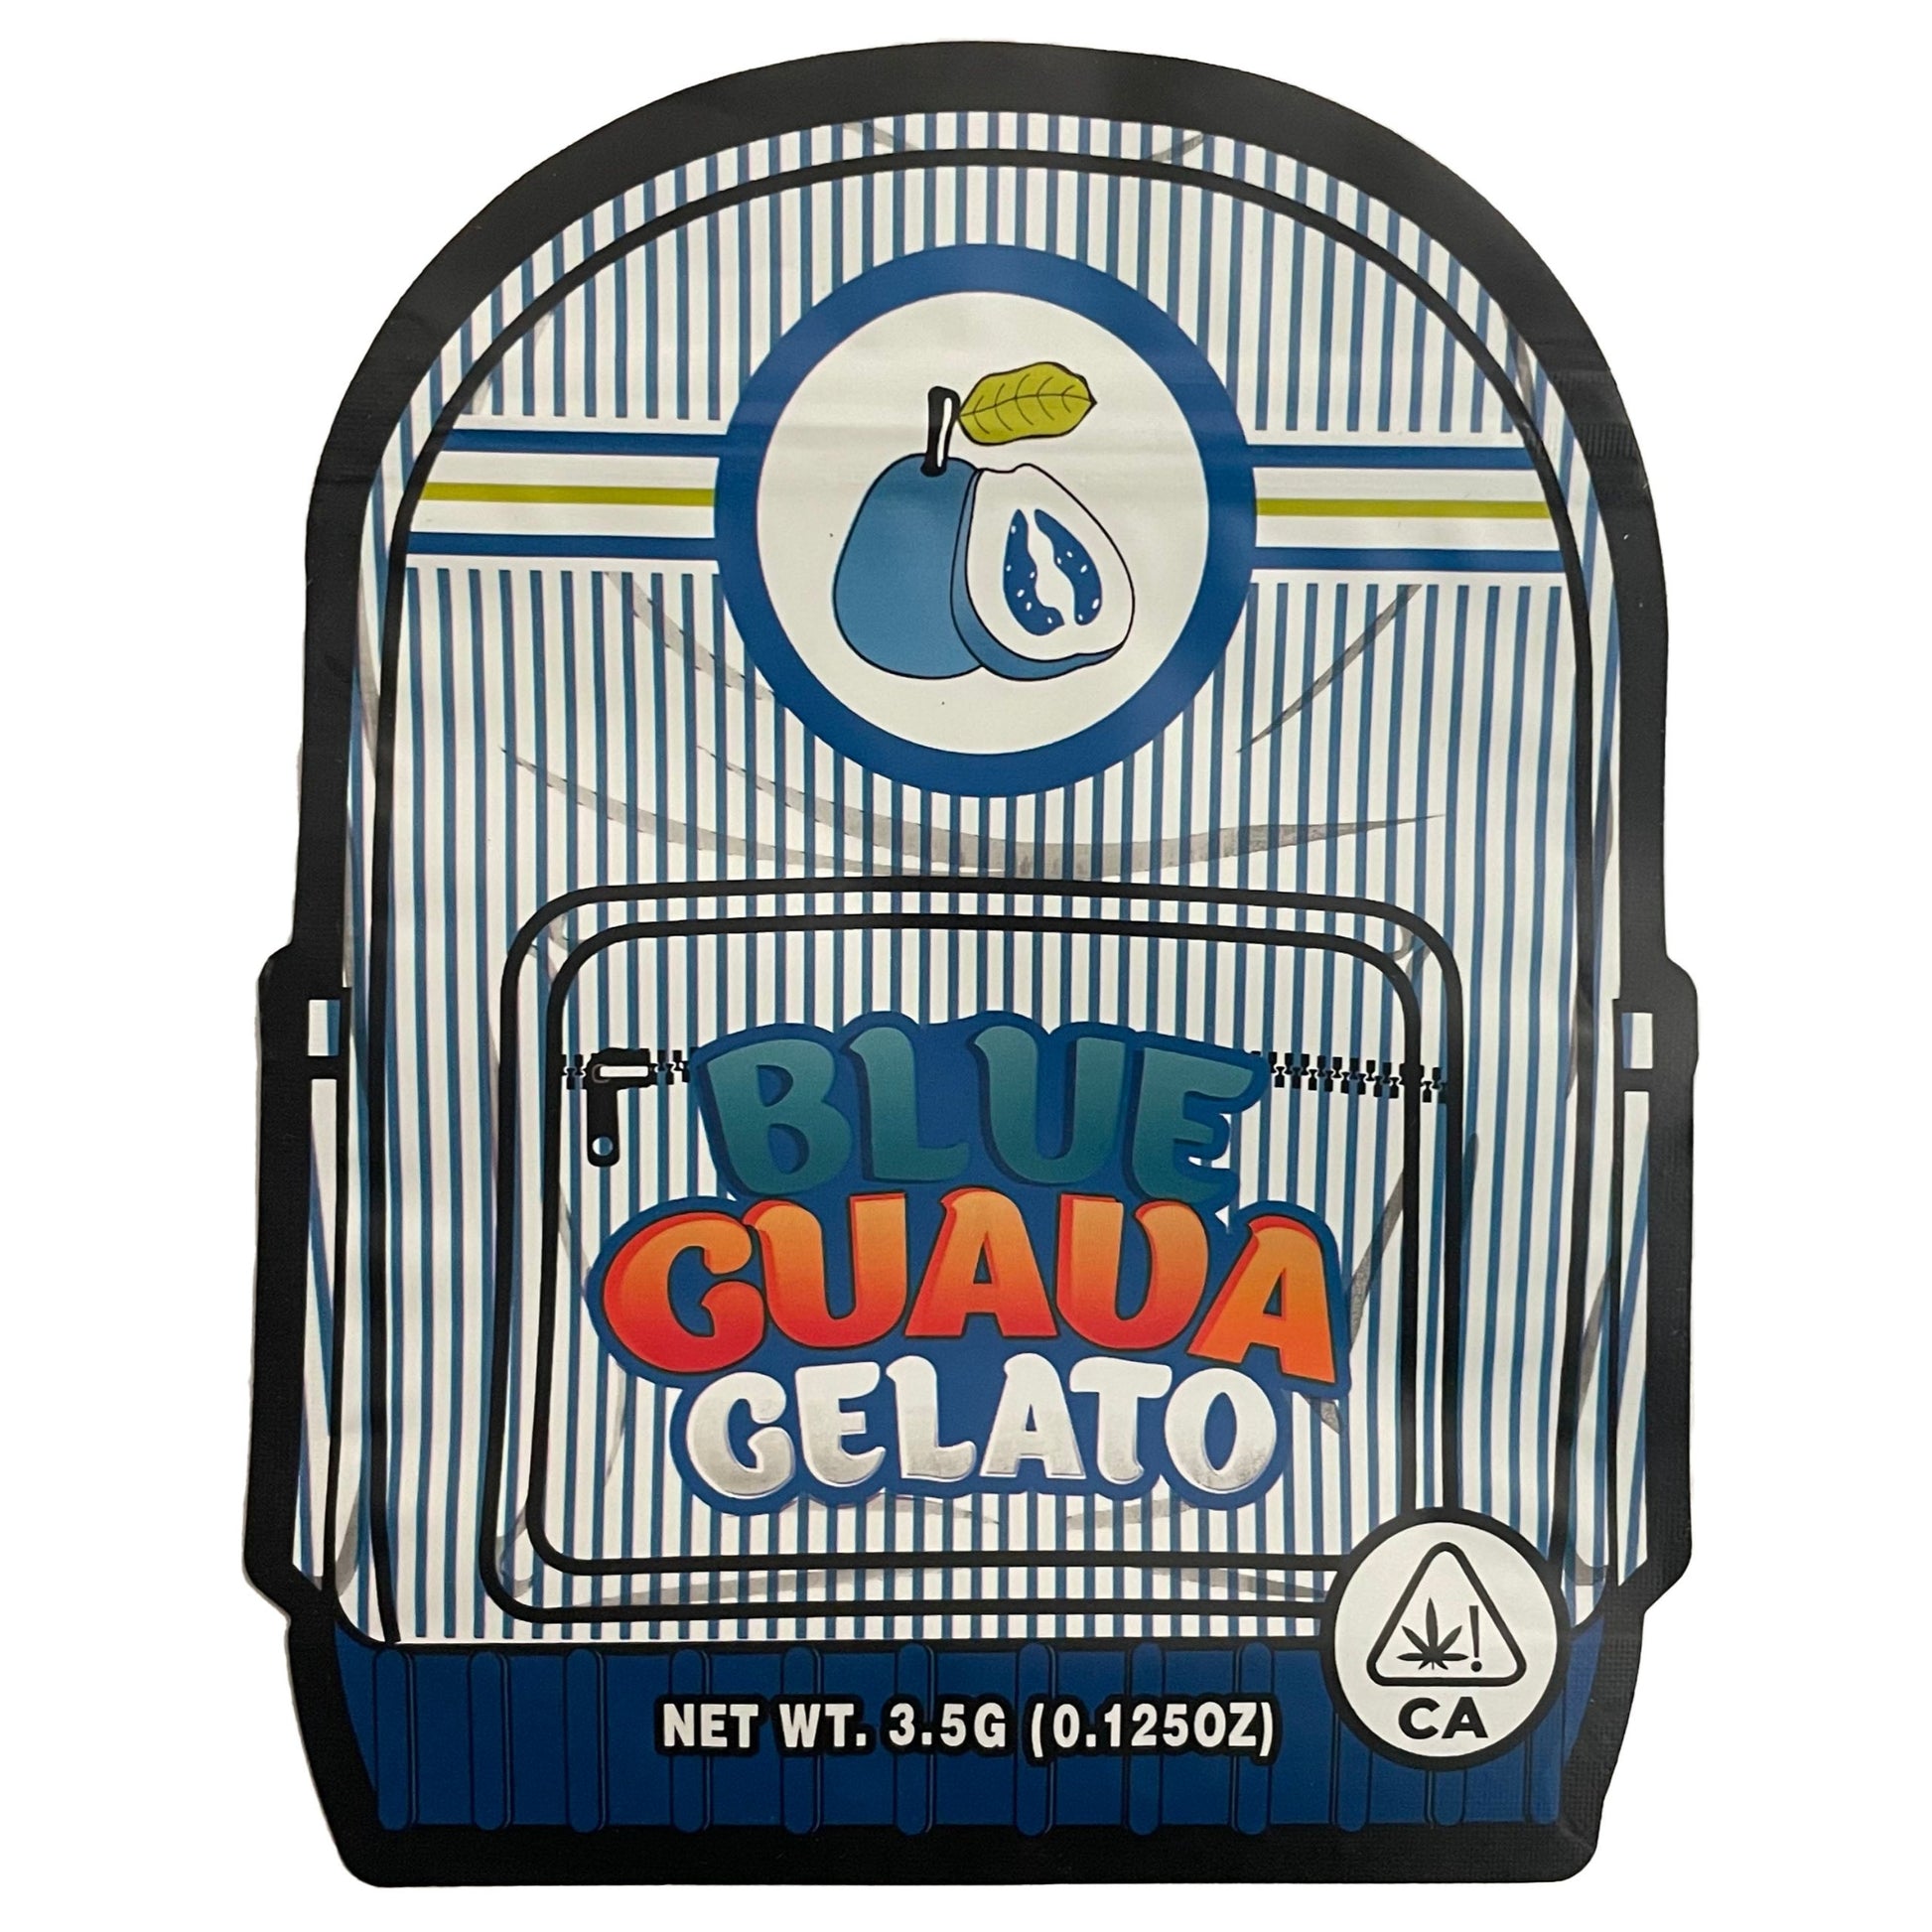 Blue Guava Gelato 3.5G Mylar Bags | Mylar Bags